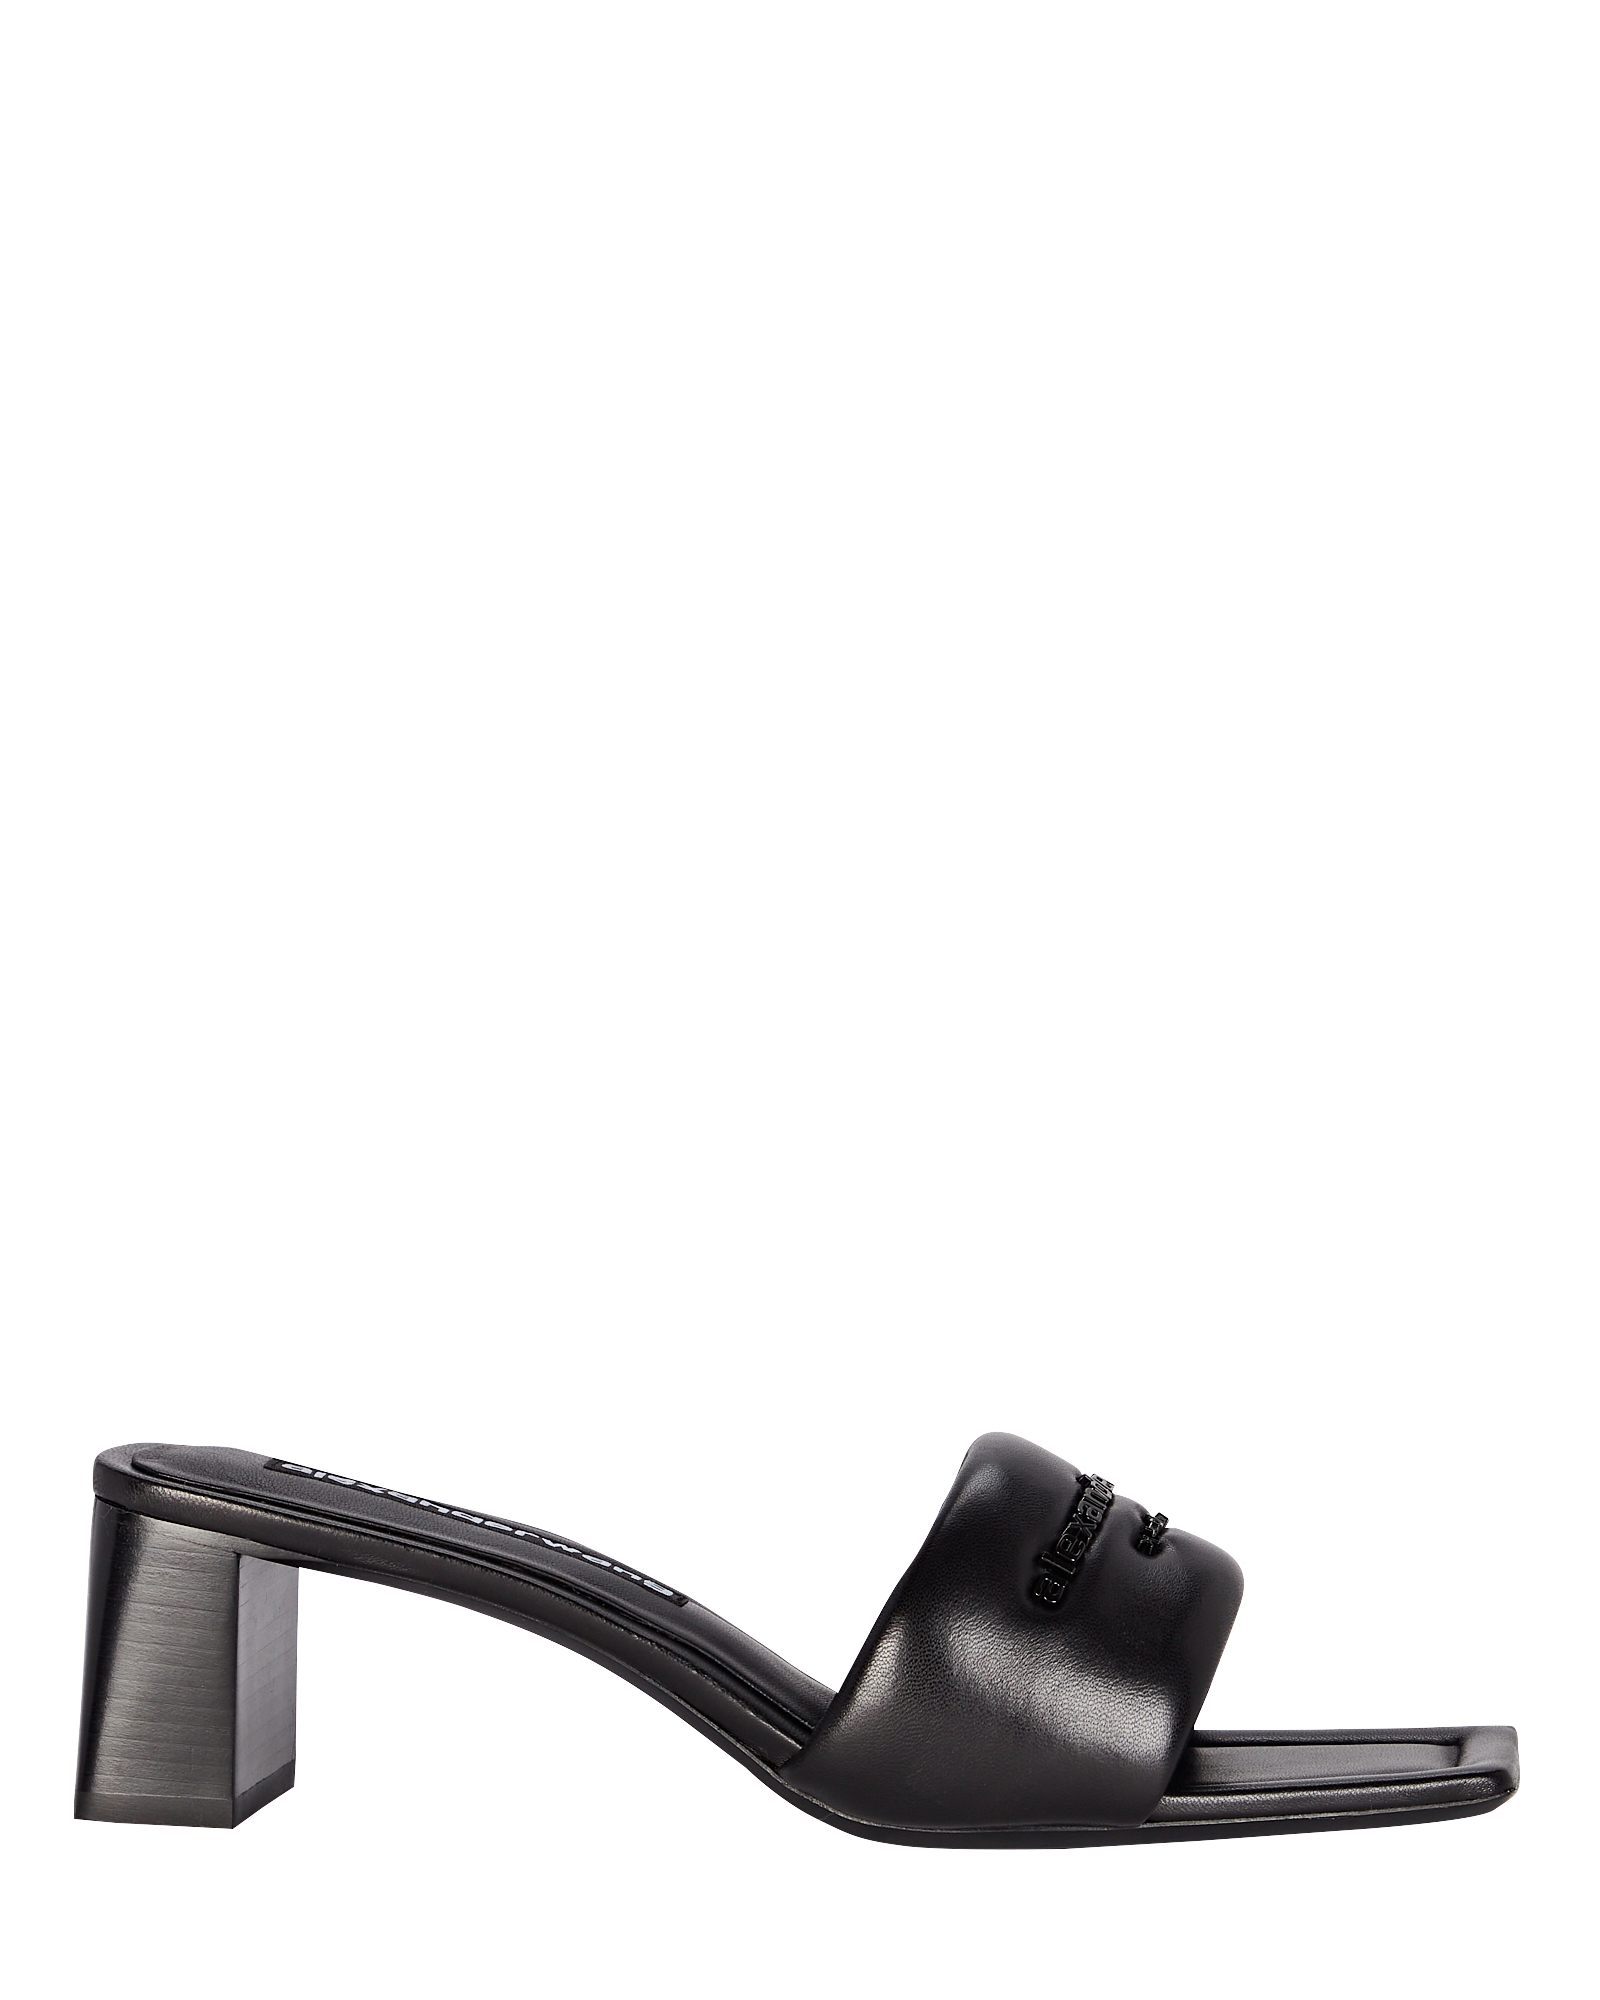 Alexander Wang Anya Logo Leather Slide Sandals | INTERMIX®